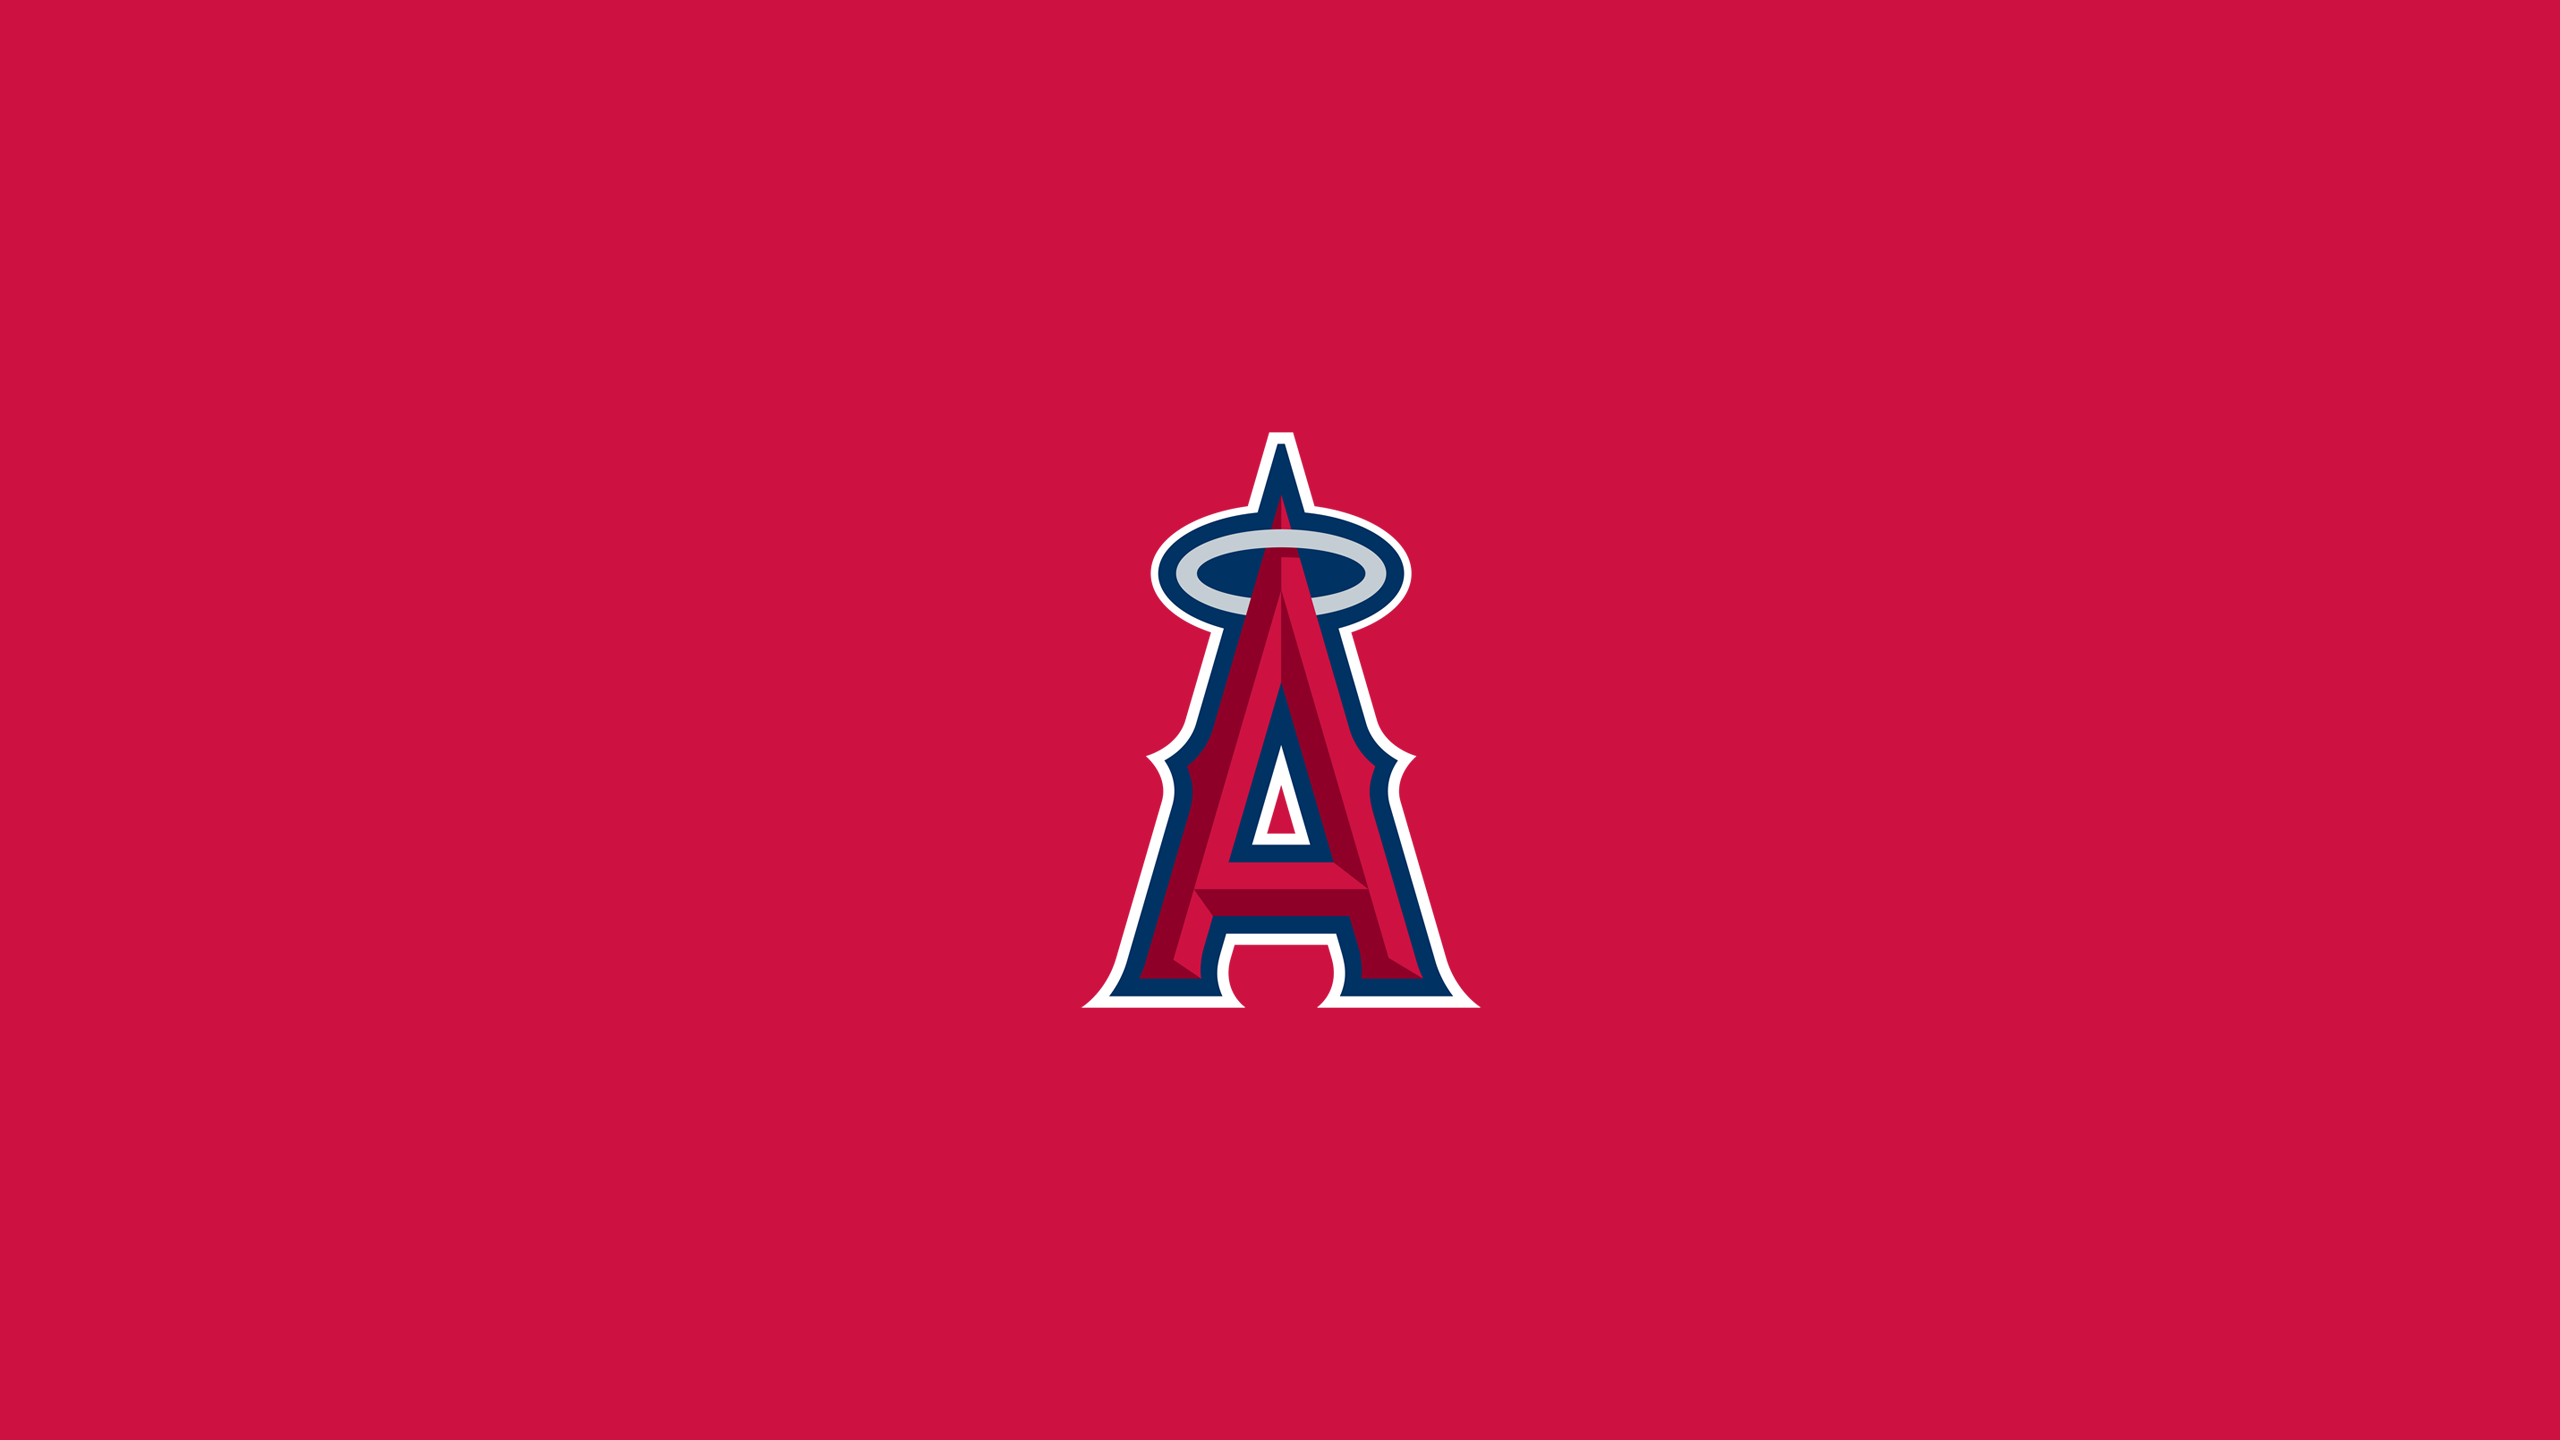 Los Angeles Angels - MLB - Square Bettor